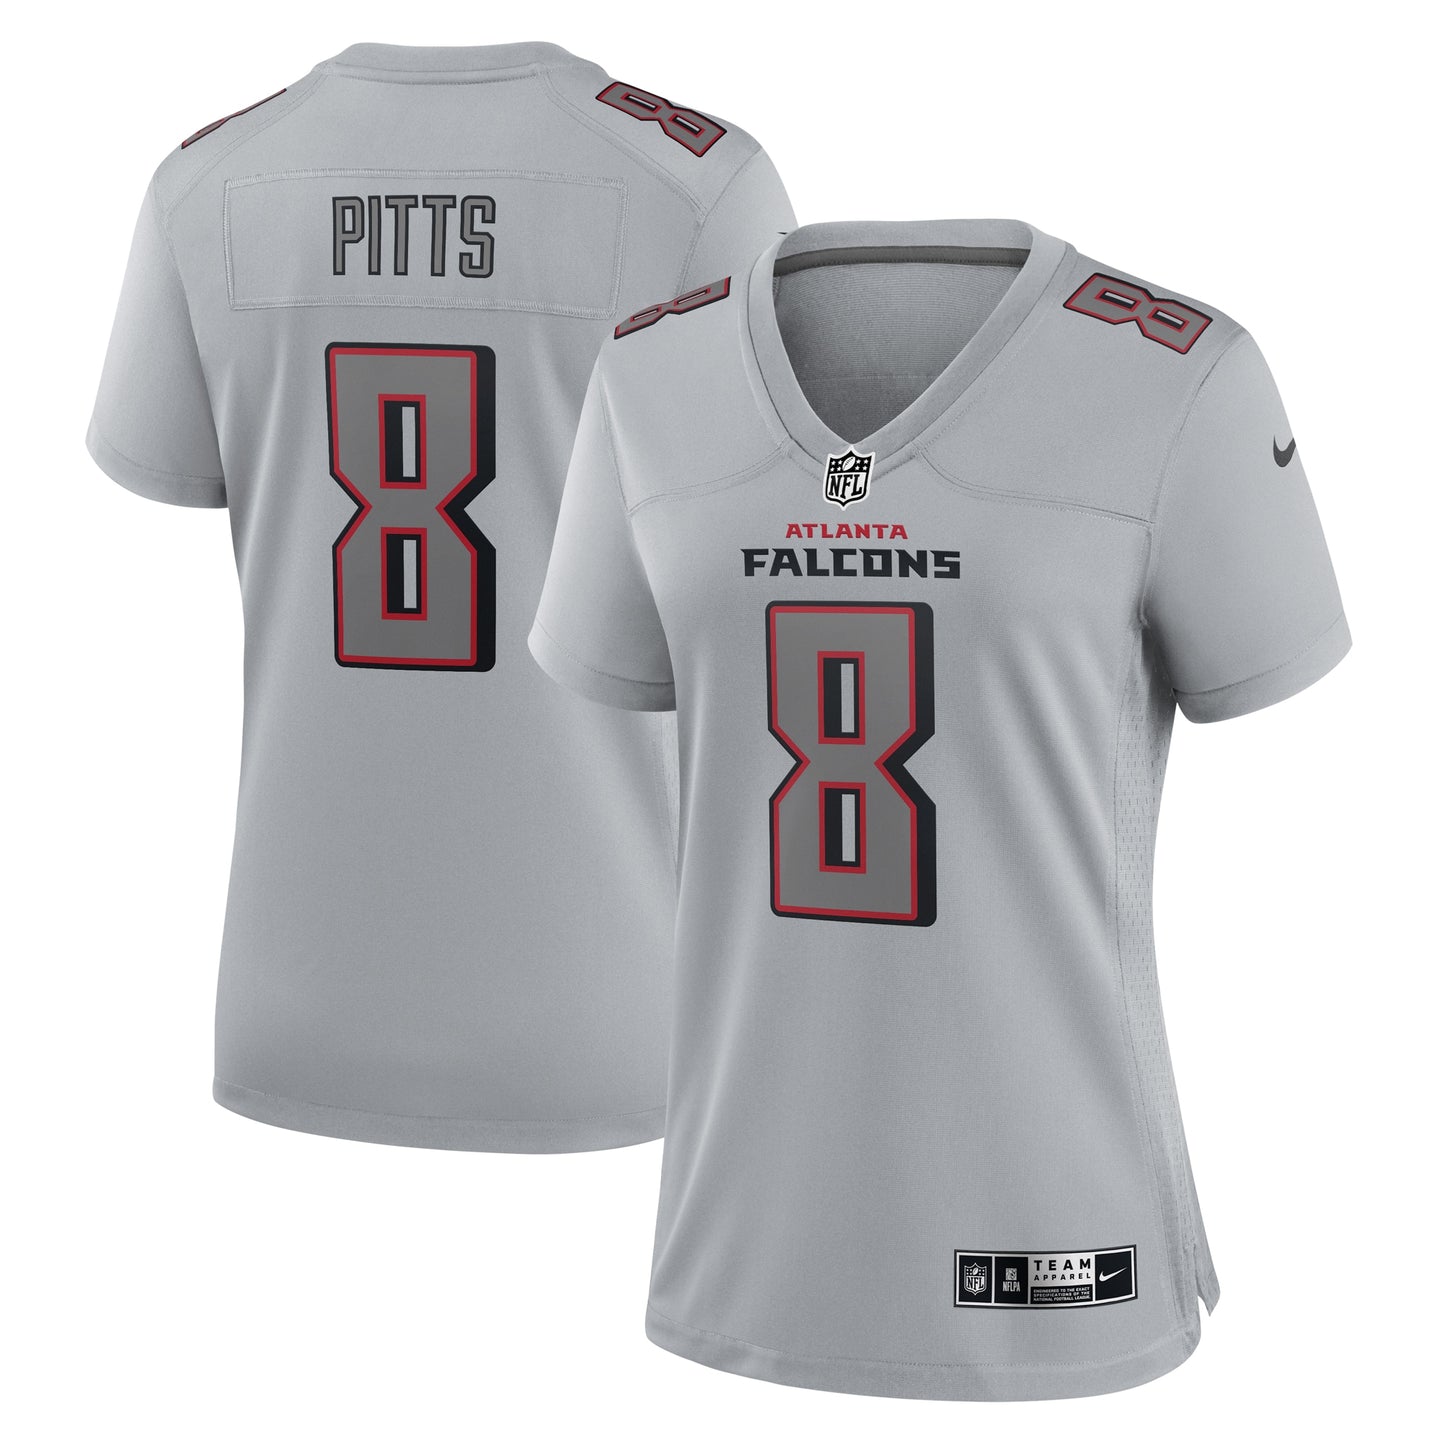 Kyle Pitts Atlanta Falcons Nike Women's Atmosphere Fashion Game Jersey - Gray